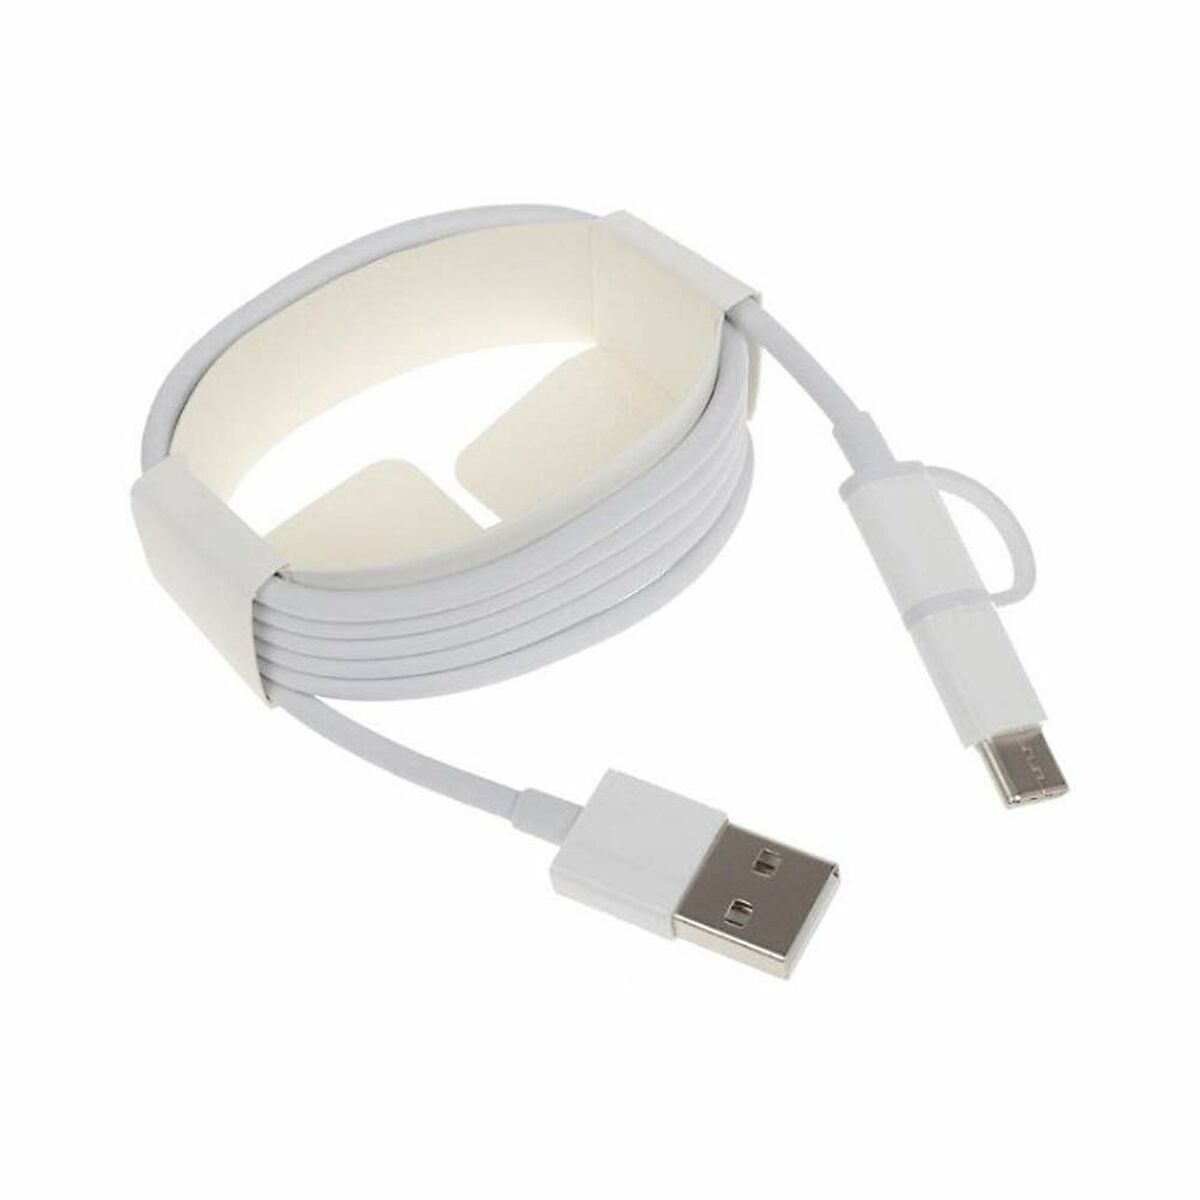 Cable Micro USB Xiaomi Mi 2-in-1 USB Cable (Micro USB to Type C) 100cm White 1 m